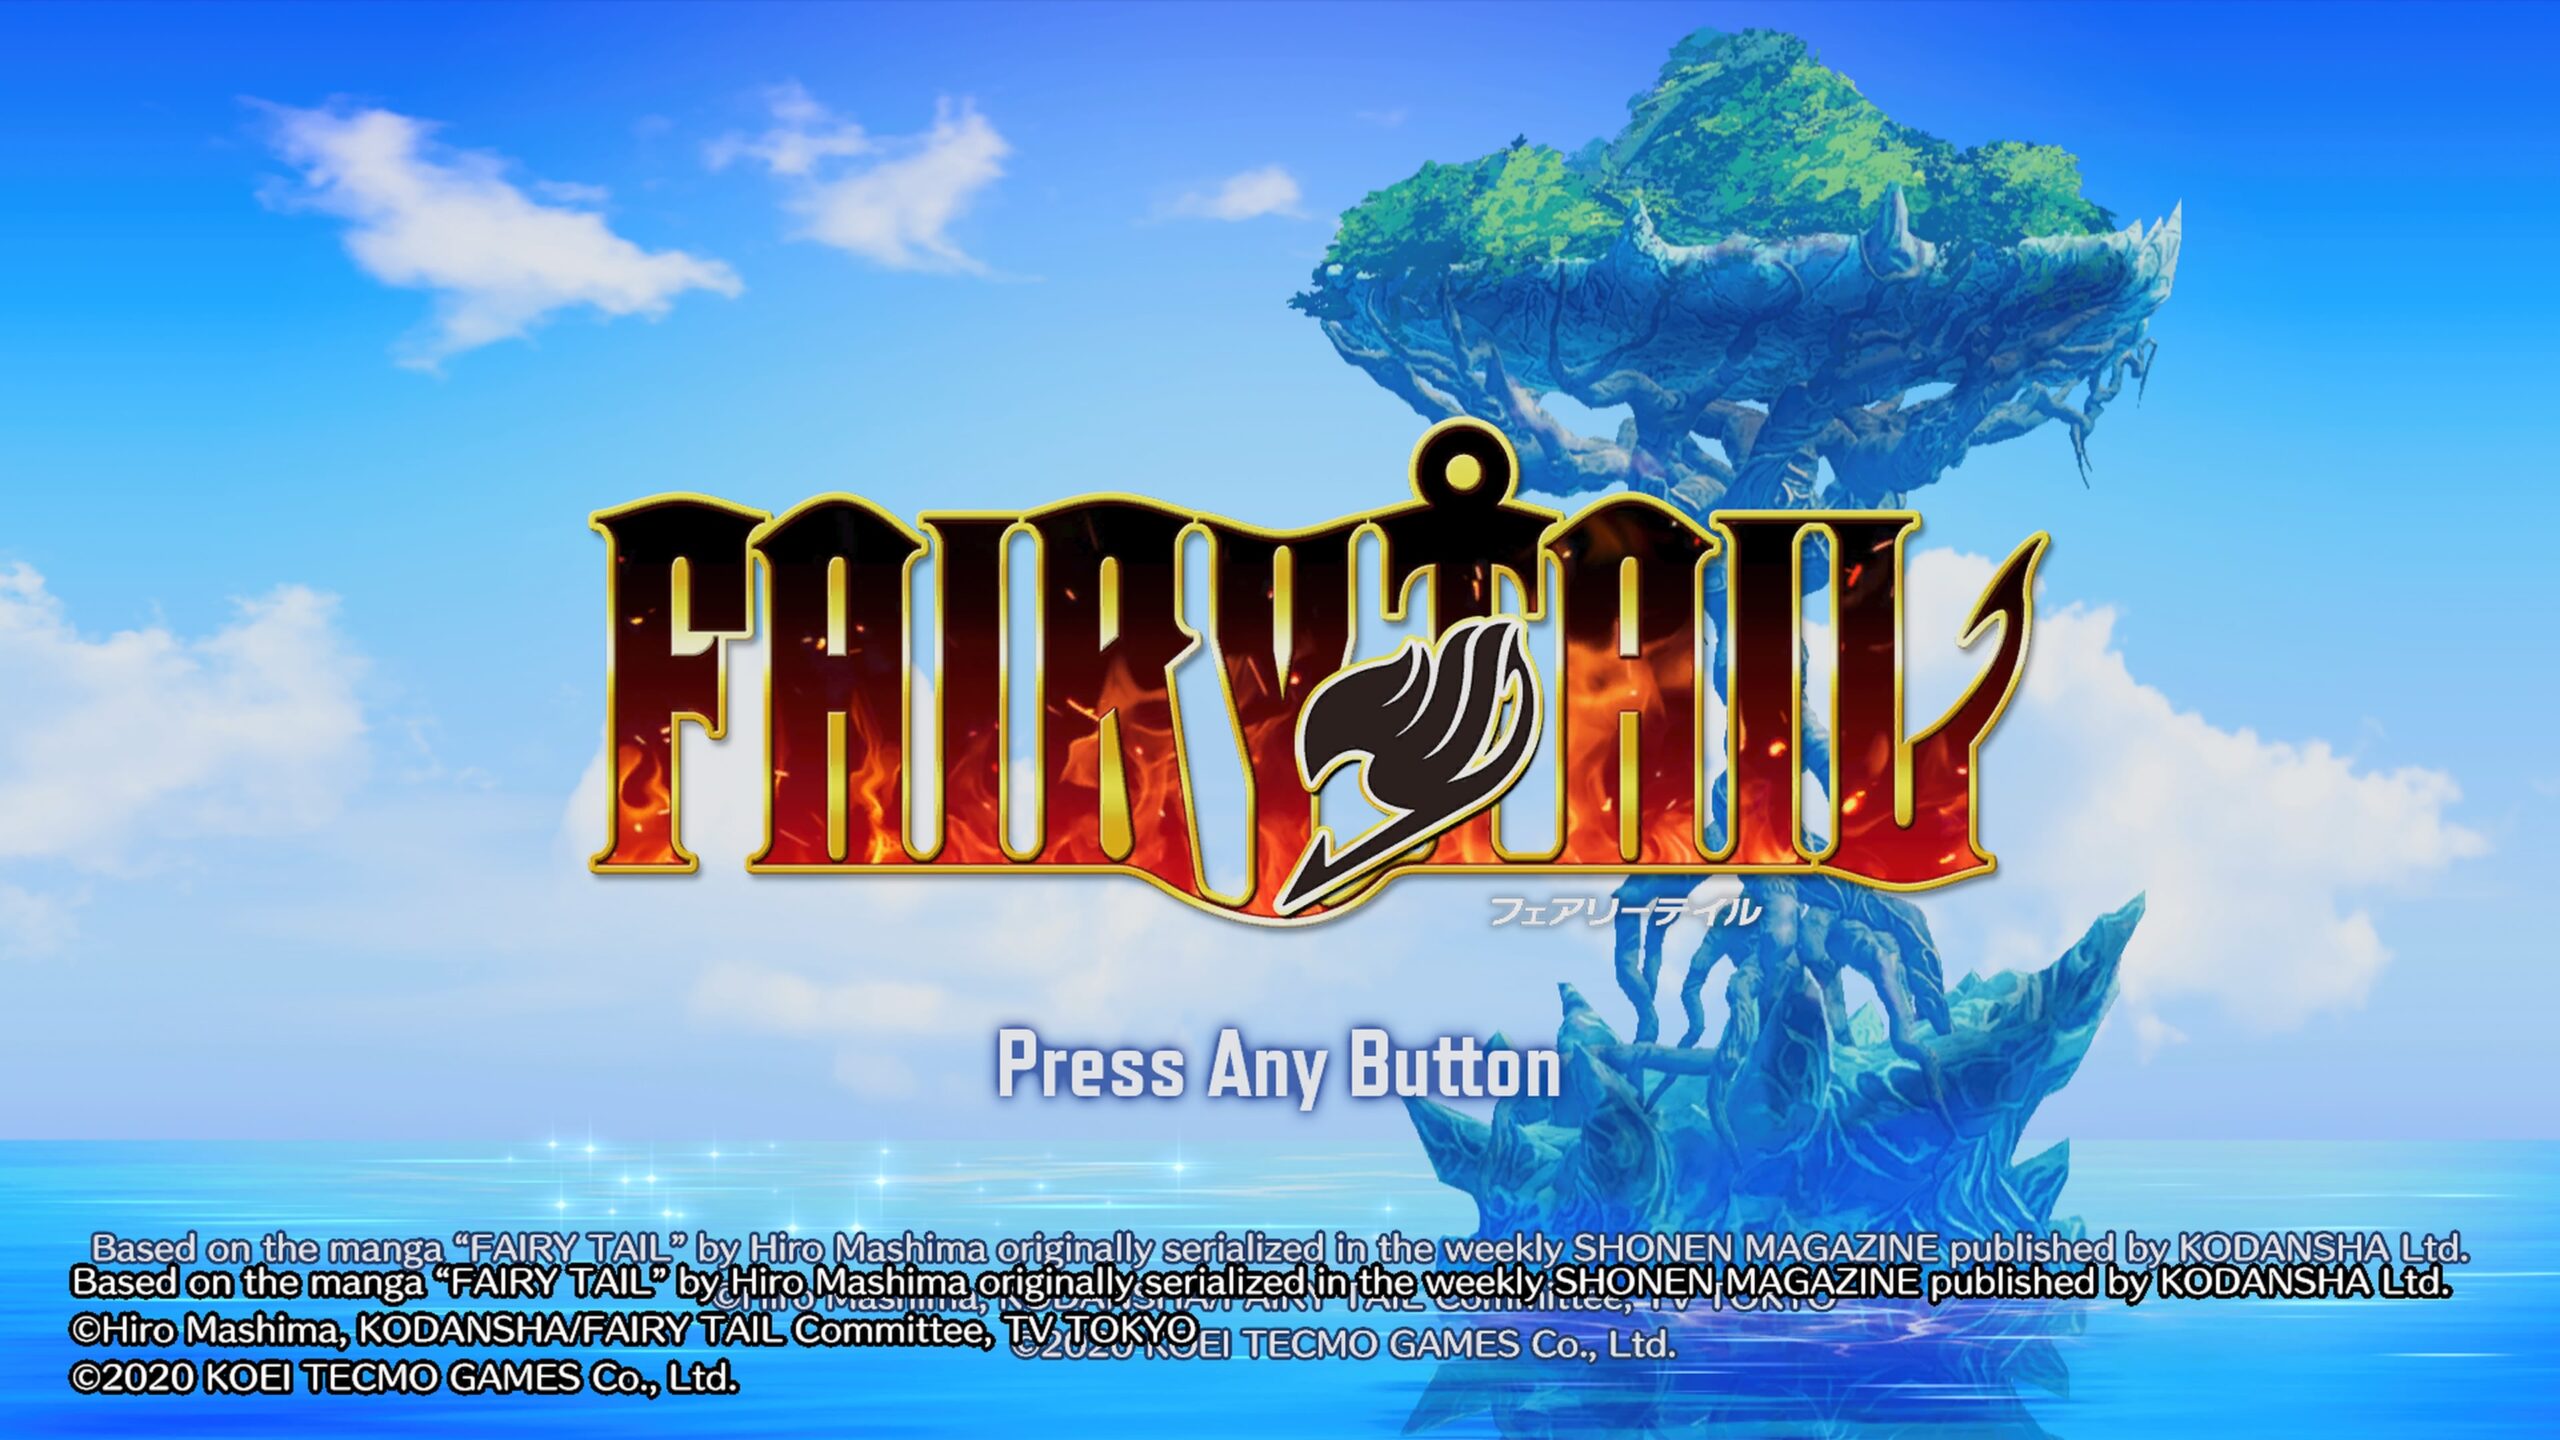 Fairy Tail details - Unison Raid, Extreme Magic Spells, Awakening